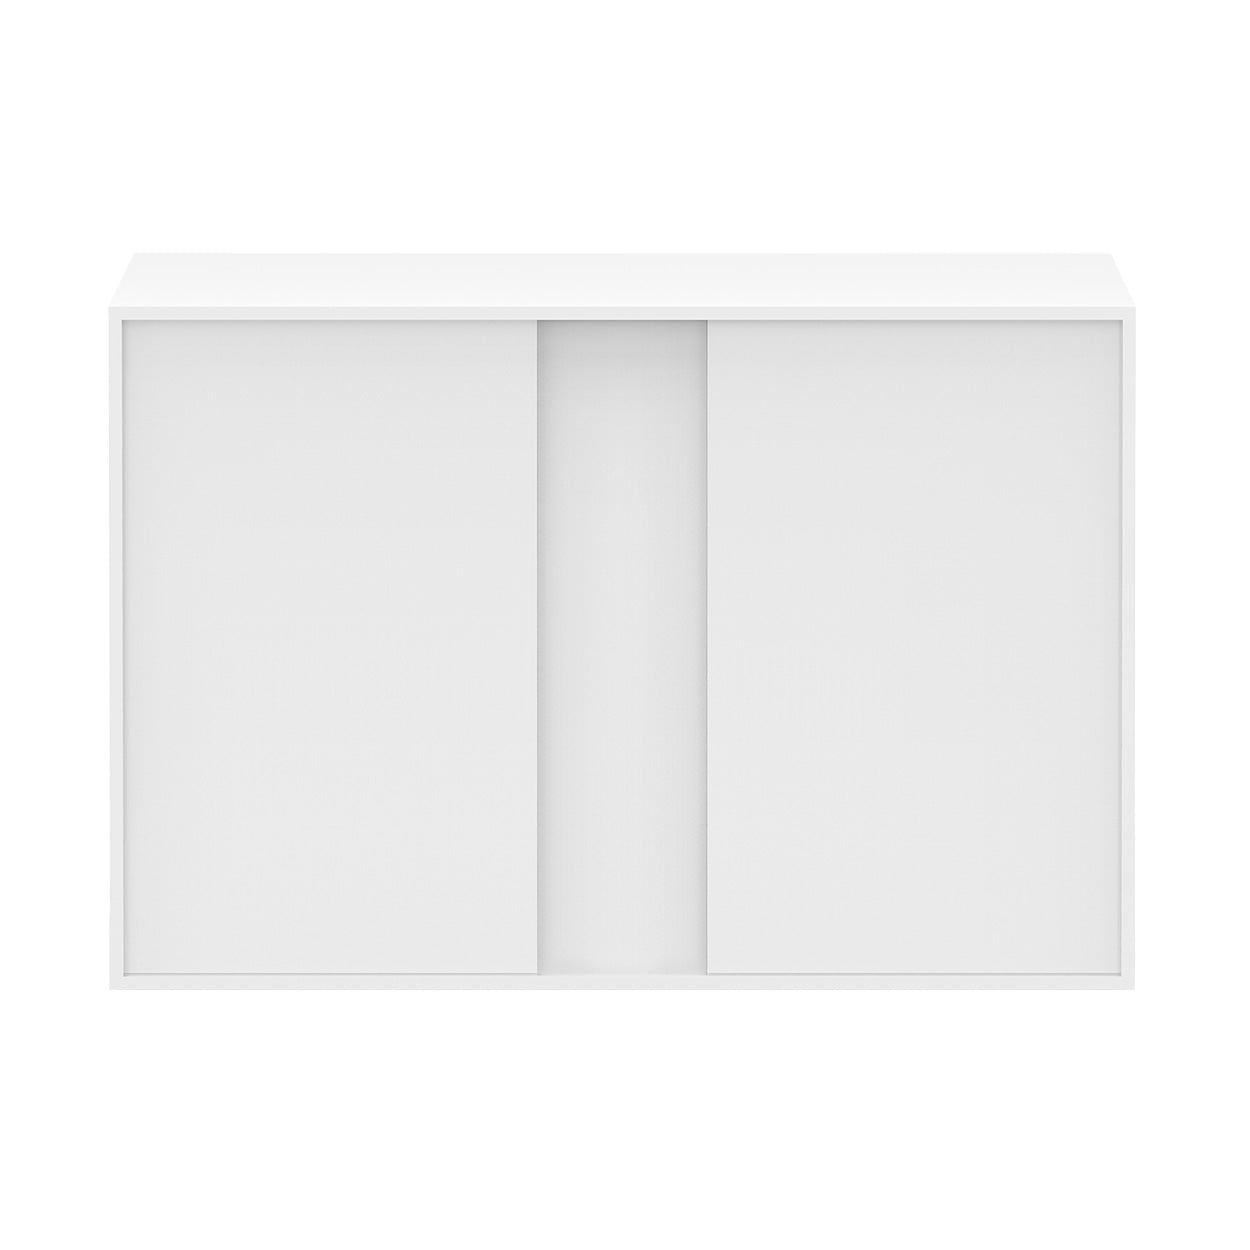 48" x 18" Aquatlantis Elegance Expert Stand - White -